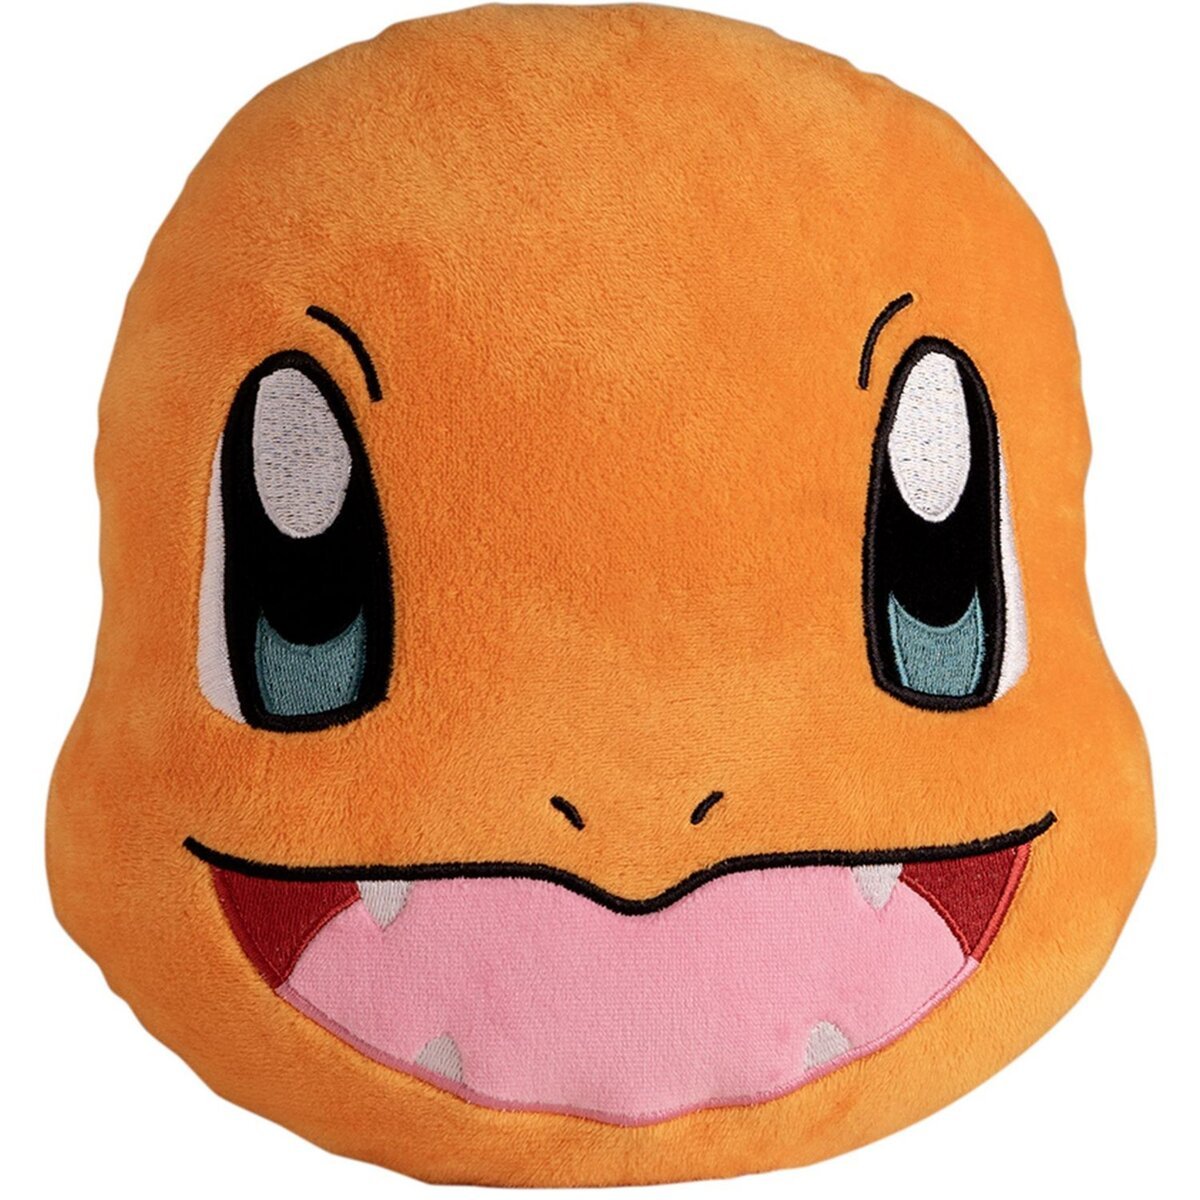 Pokemon cushion - Charmander - Mu Shop